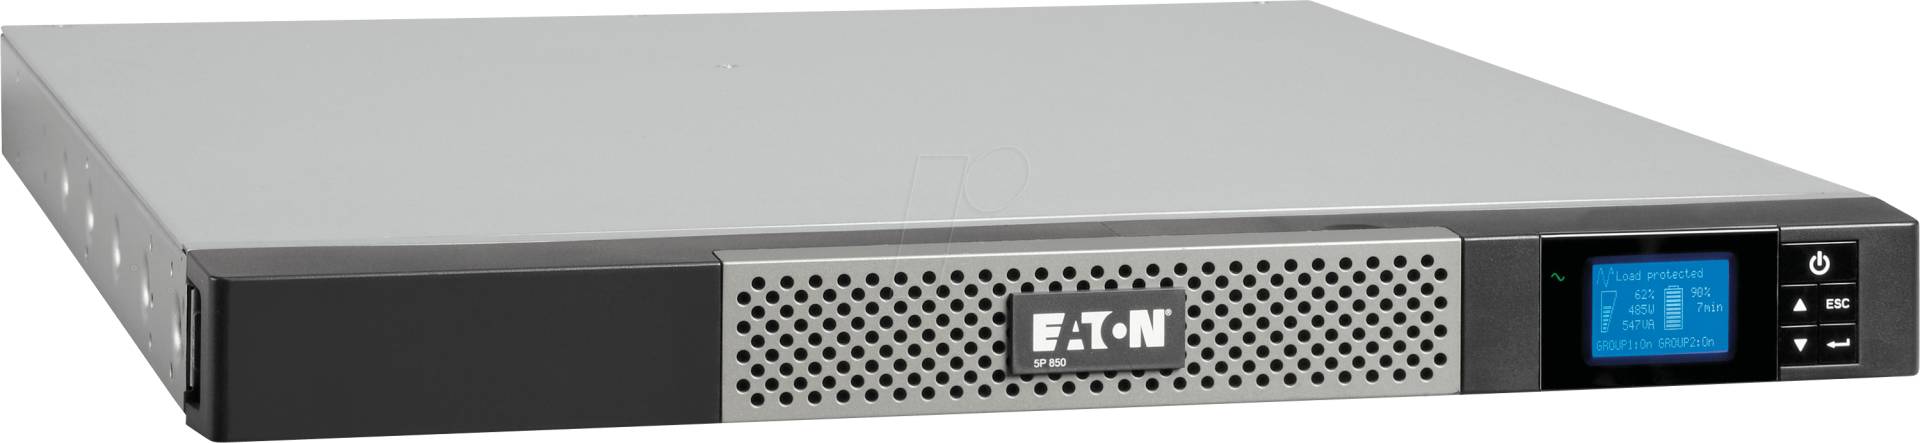 EATON 5P1550IR - USV, 1550 VA / 1100 W, USB-Port, RS232-Port von Eaton